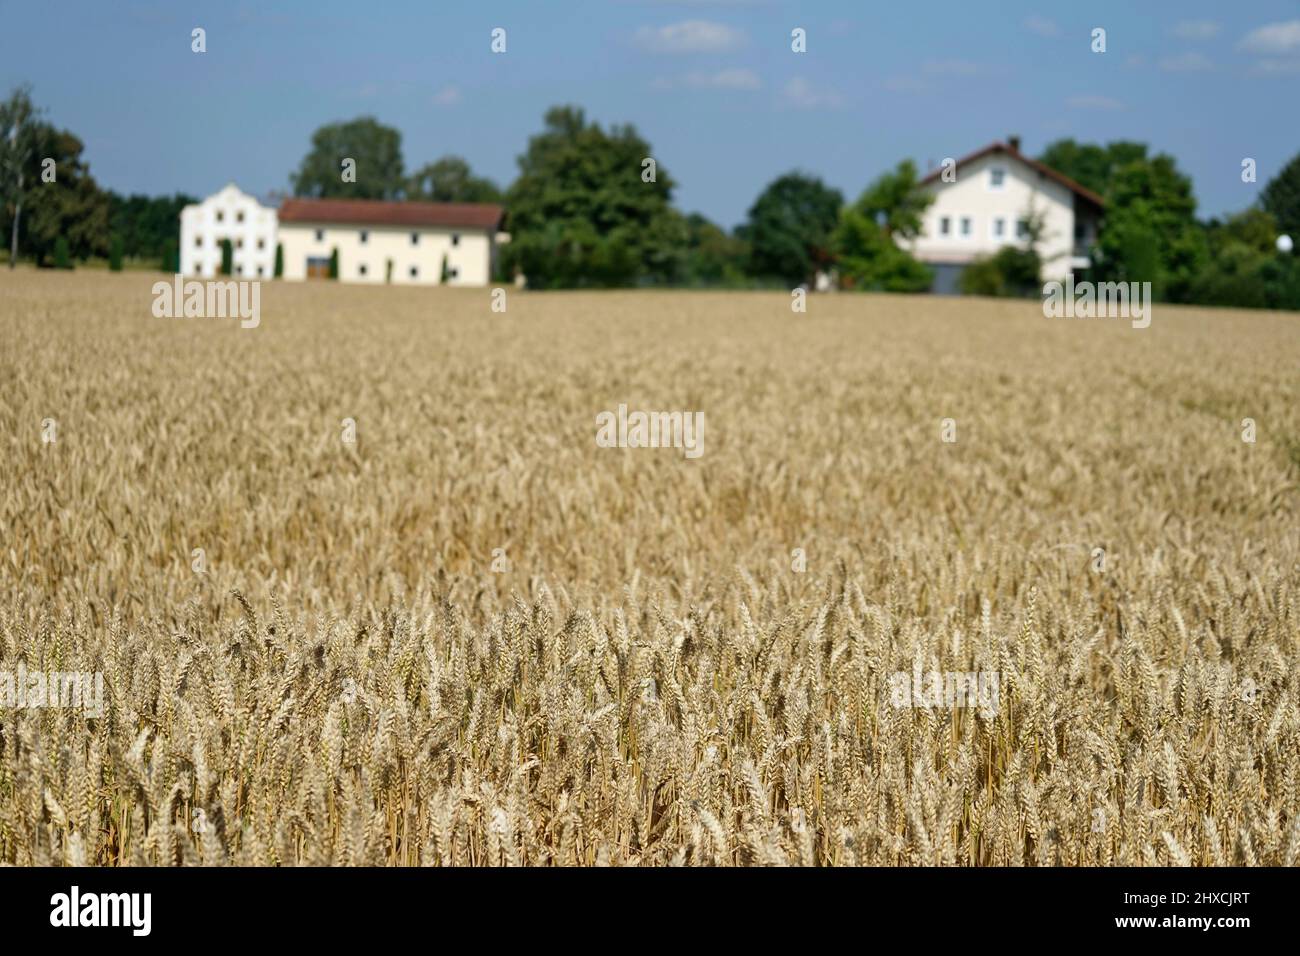 Germany, Bavaria, Upper Bavaria, Altötting county, agriculture, wheat field, farm Stock Photo